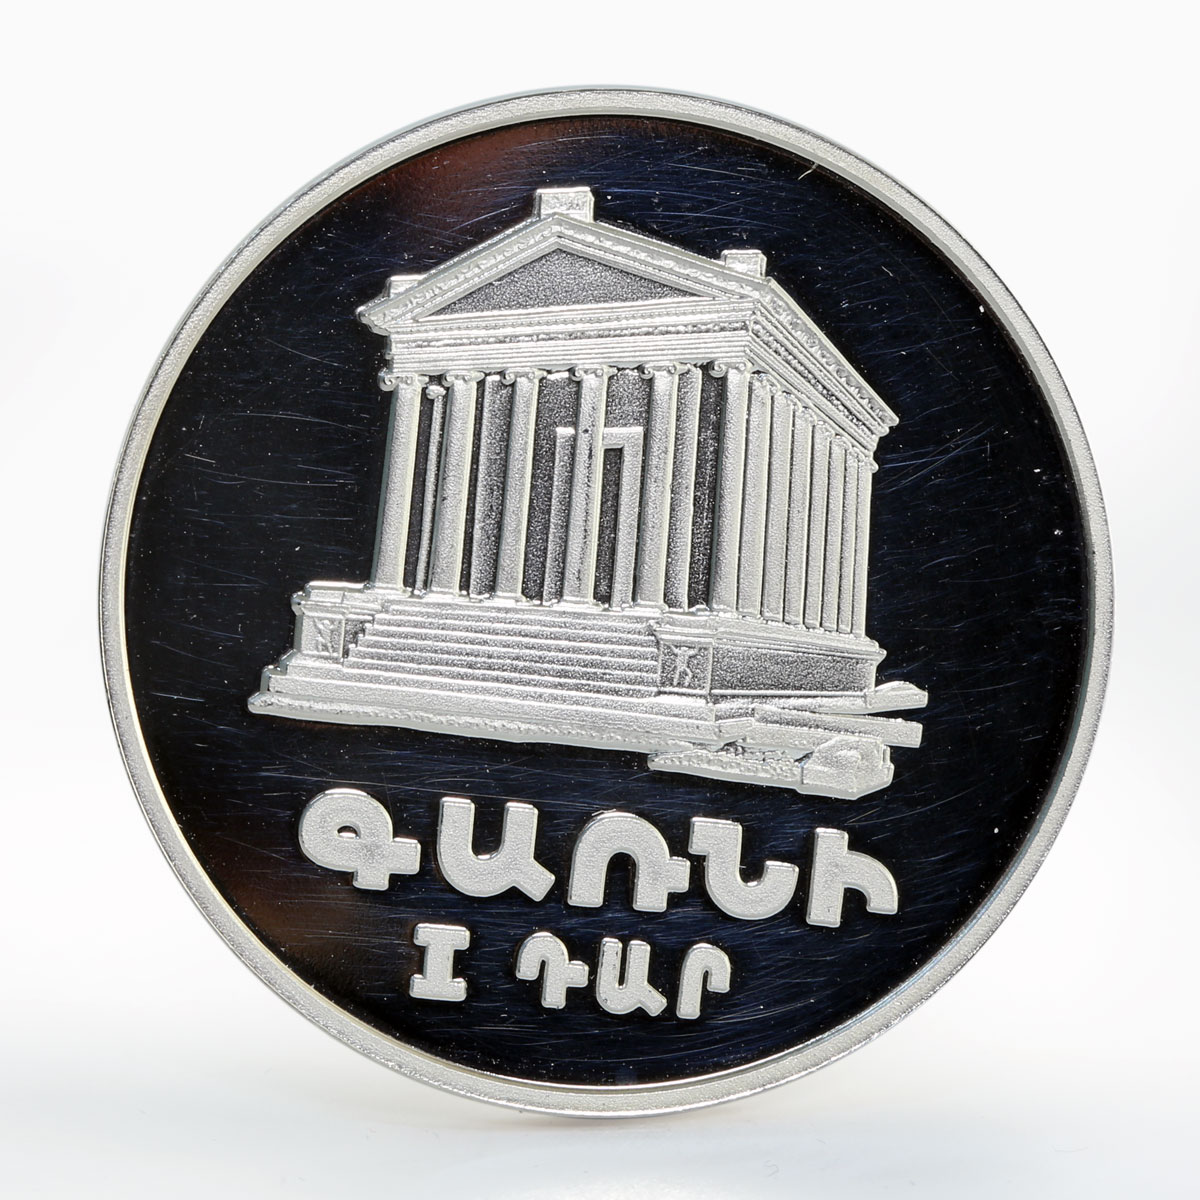 Armenia 25 dram Temple of Garni proof silver coin 1994